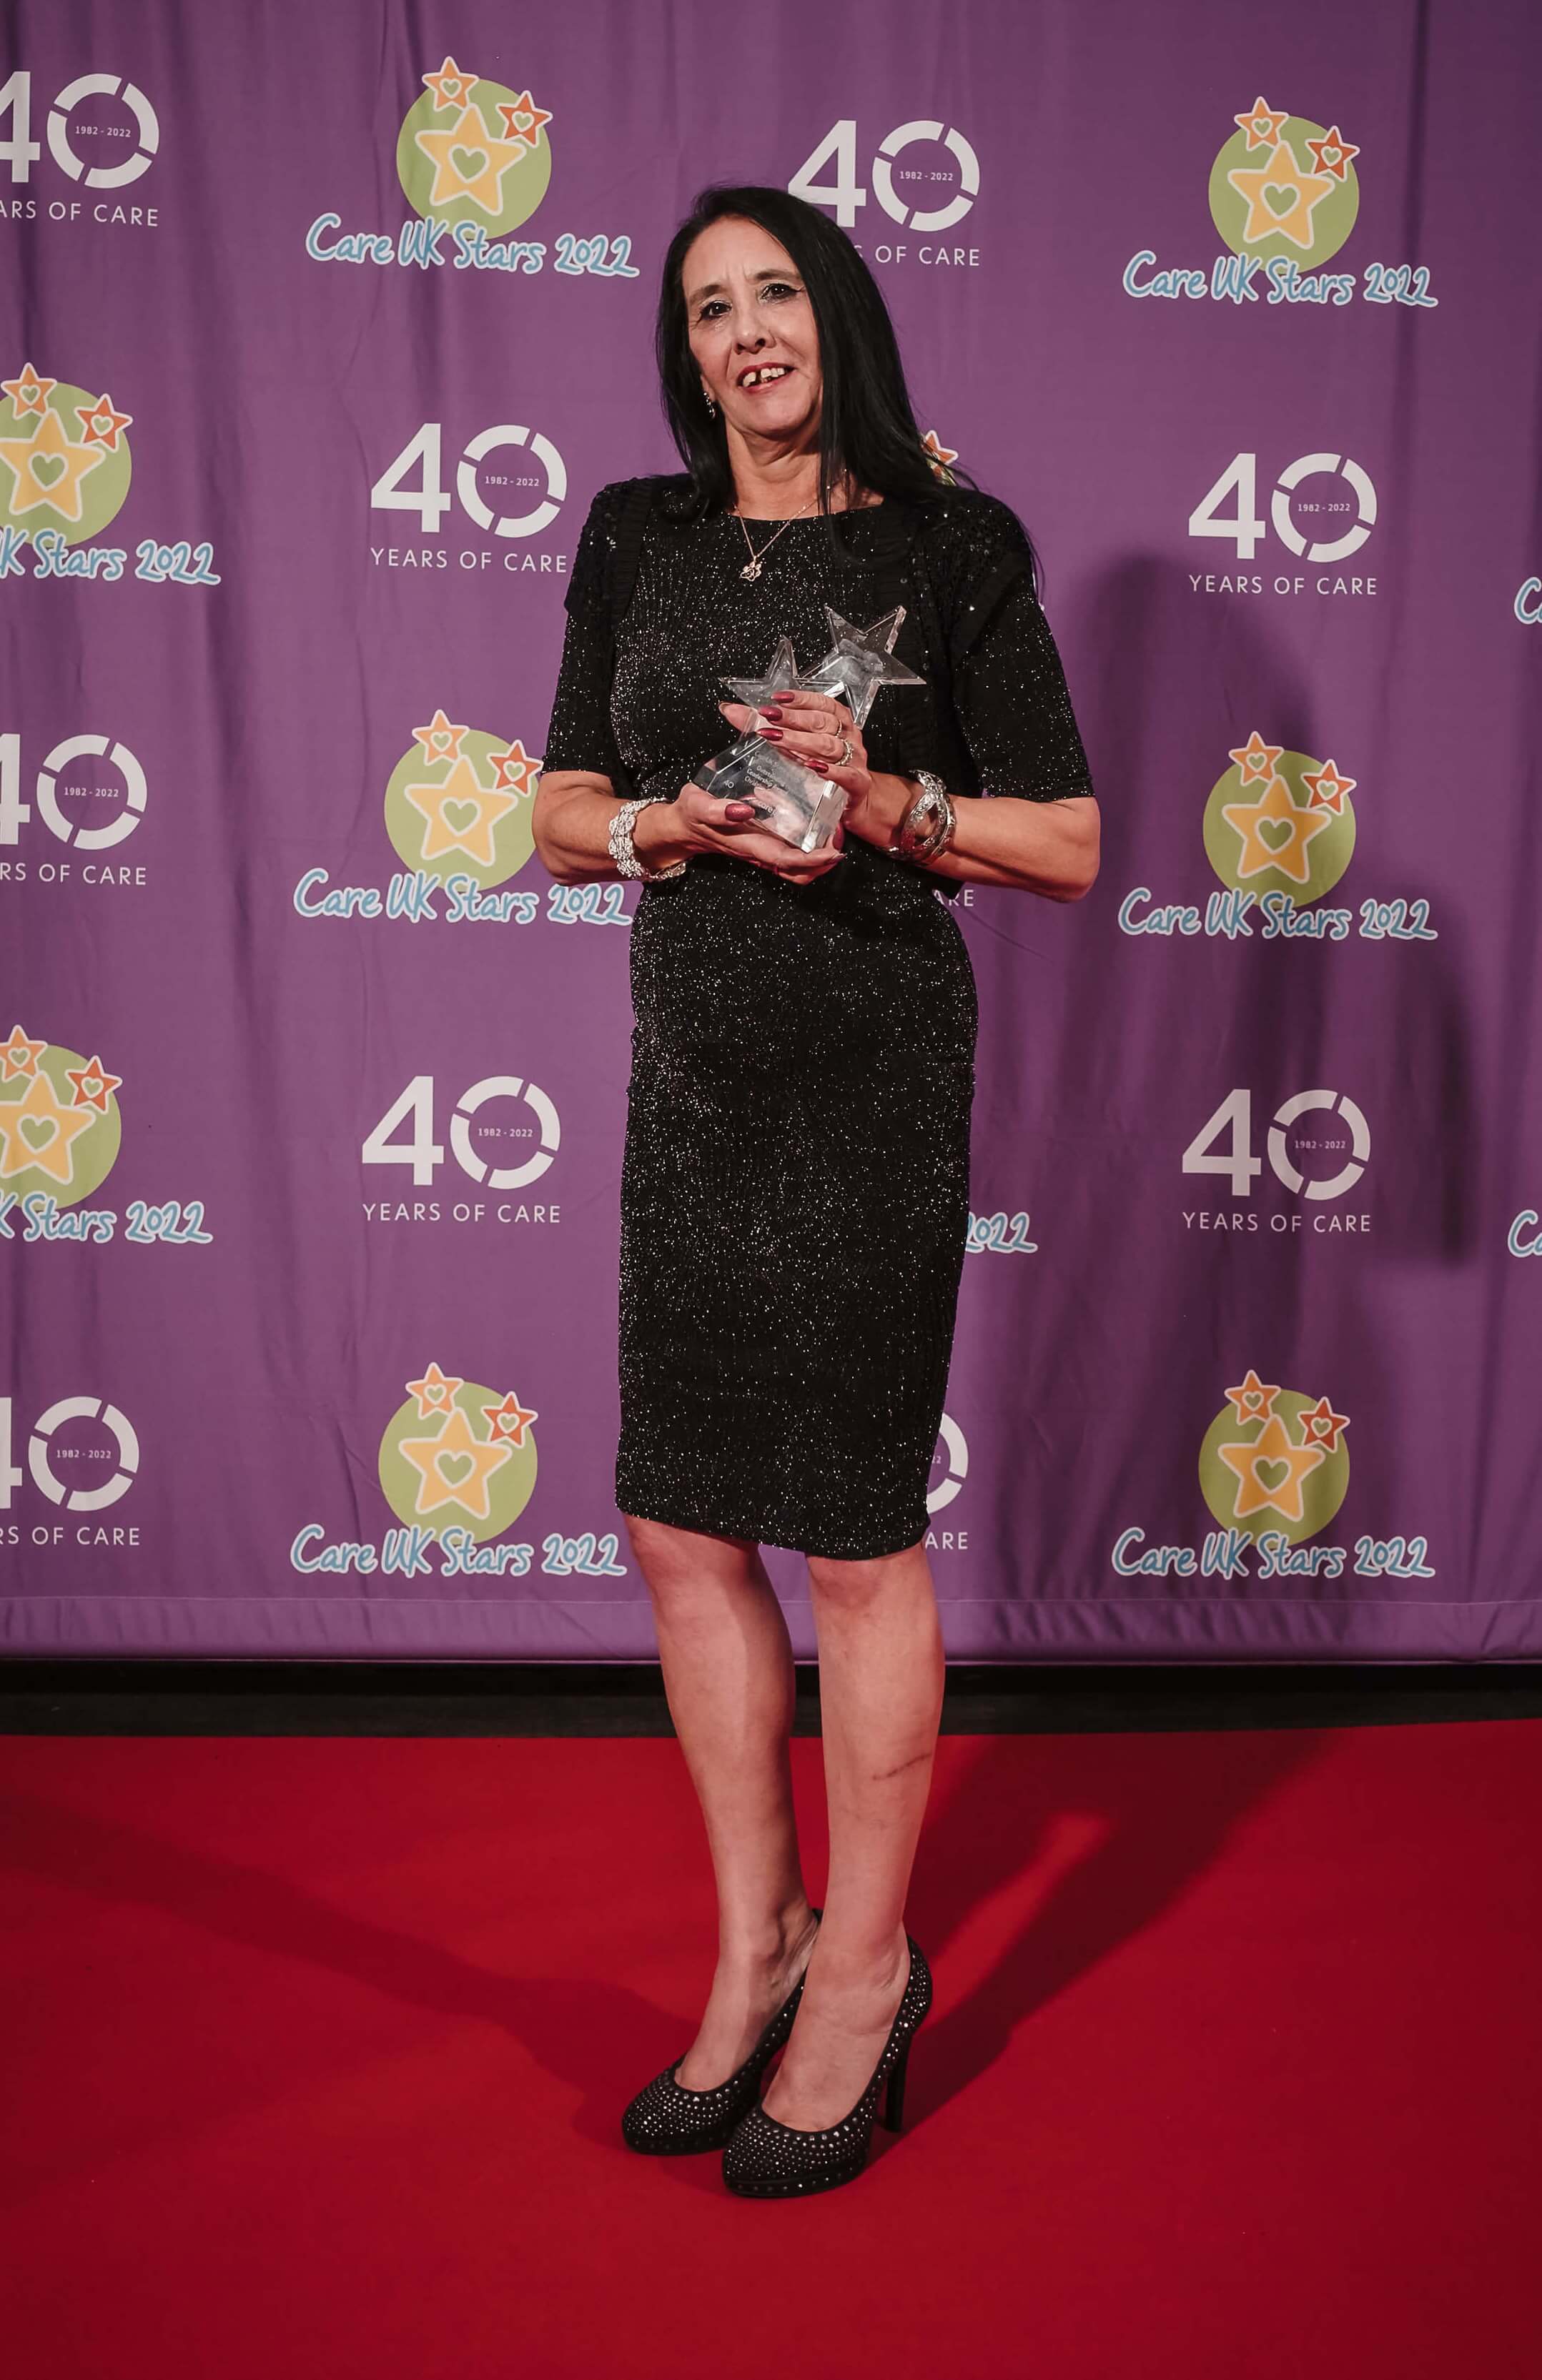 Outstanding Leadership Award, Christine Gibson